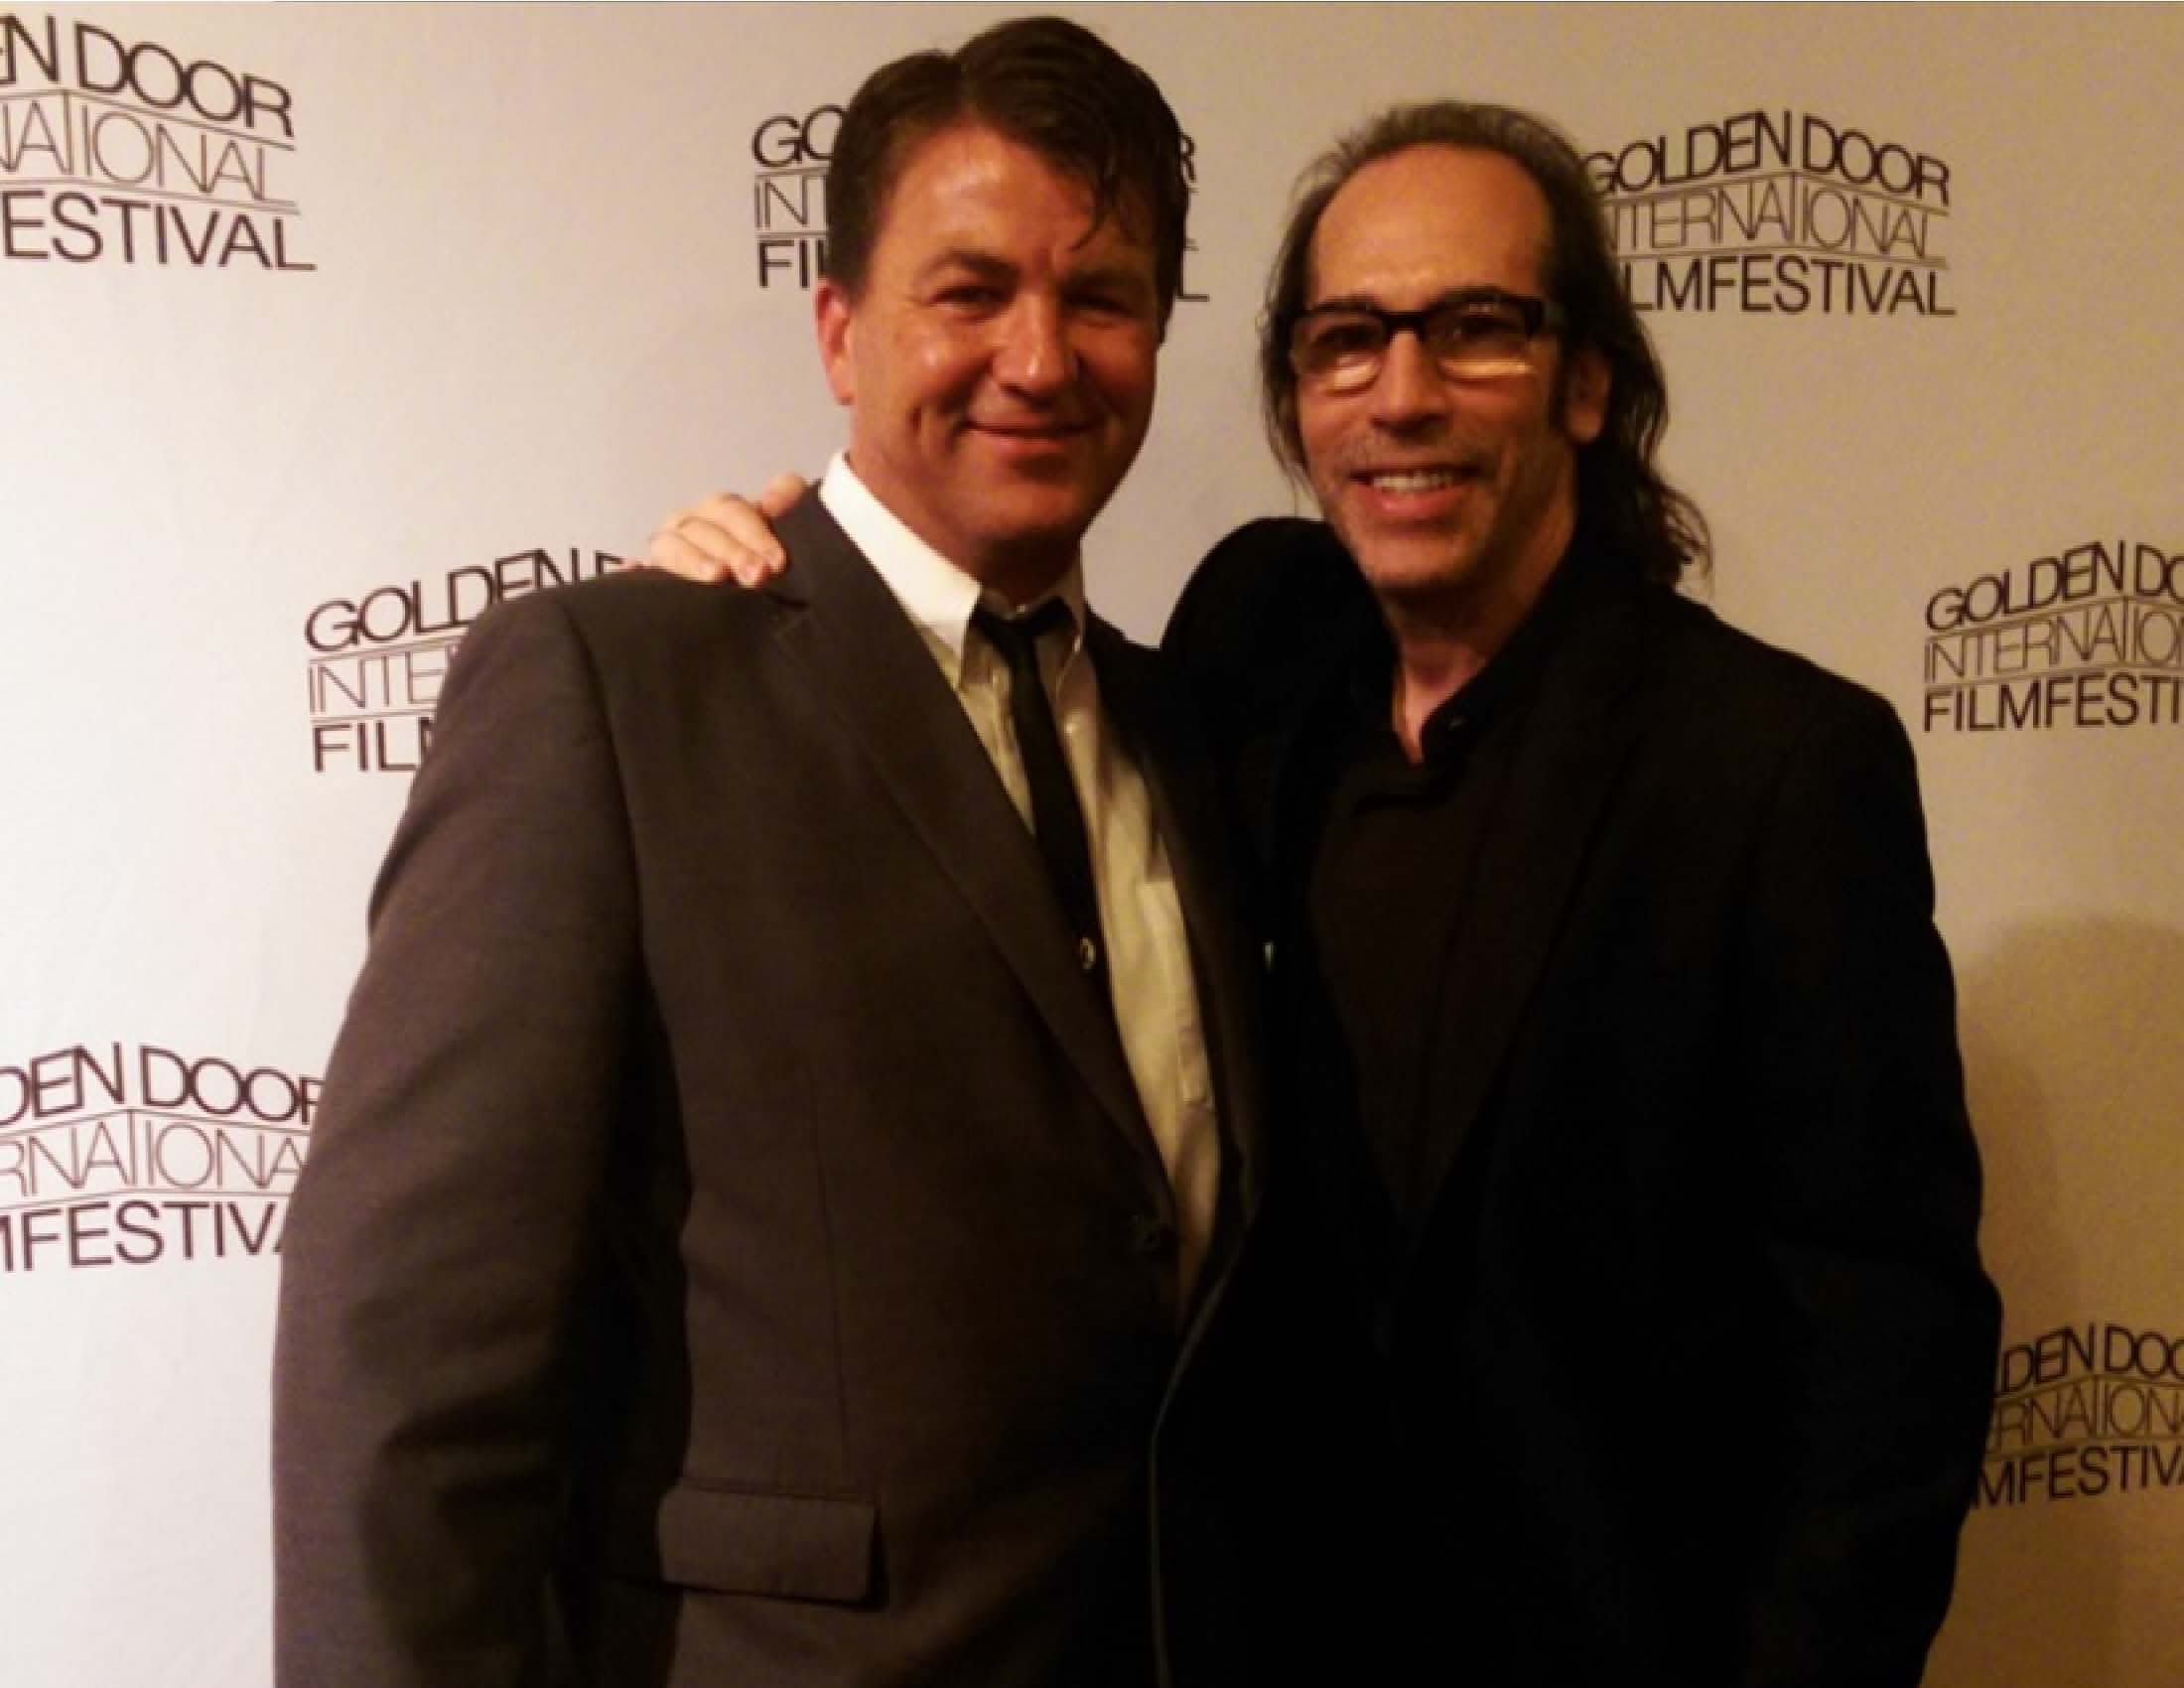 At the Golden Door International Film Festival for Lamotta: the Bronx Bull, with director Martin Guigui.